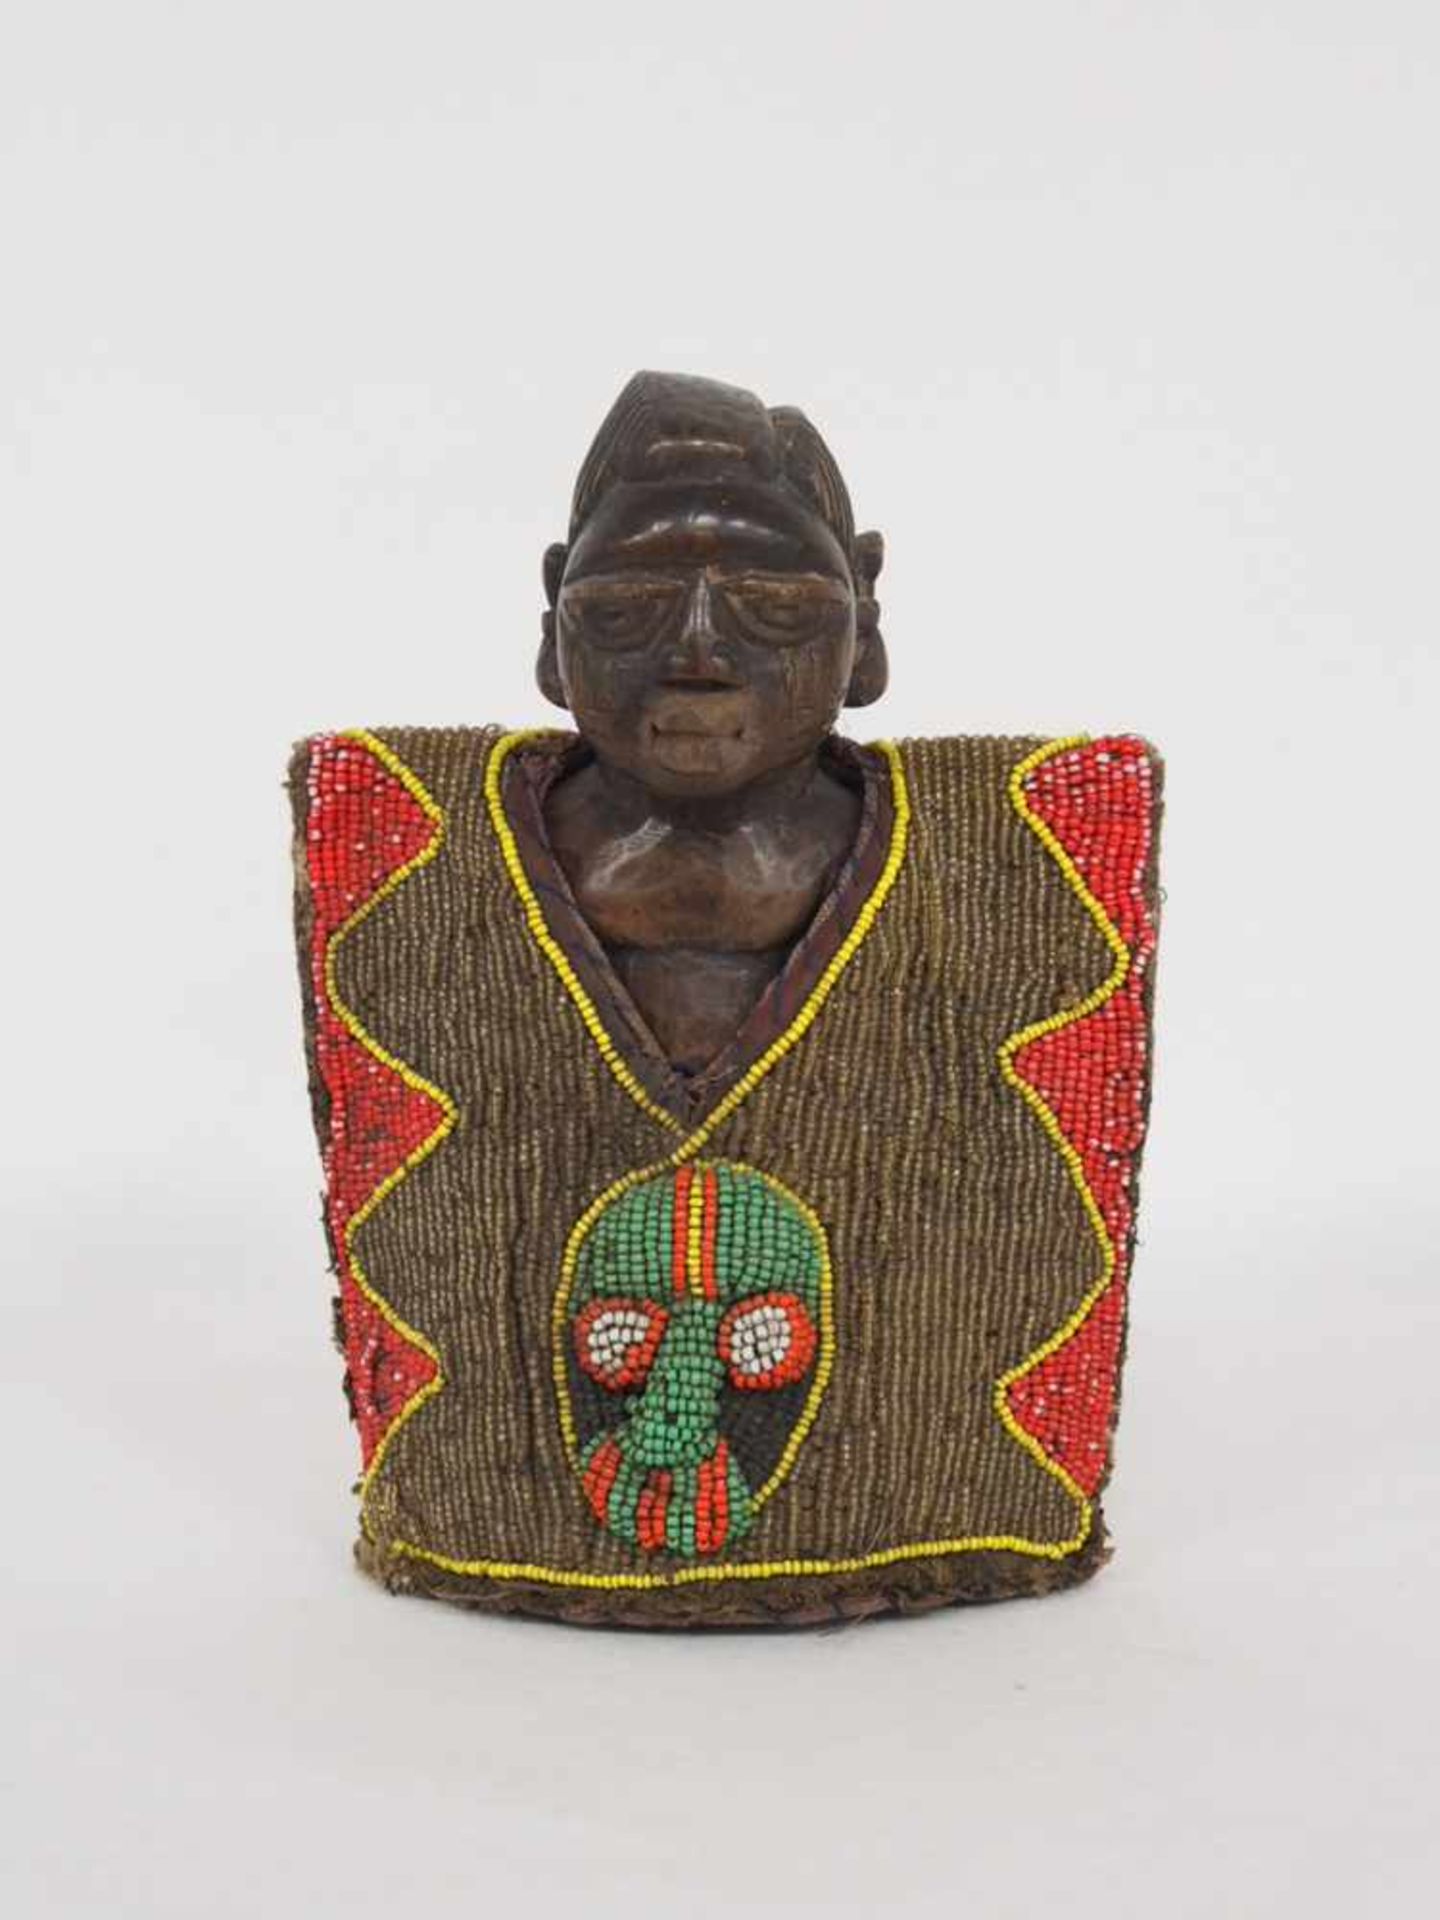 Einzelne ZwillingsfigurHolz, geschnitzt, Glasperlenhemd, Yoruba, Nigeria, Anfang 20. Jahrhundert,